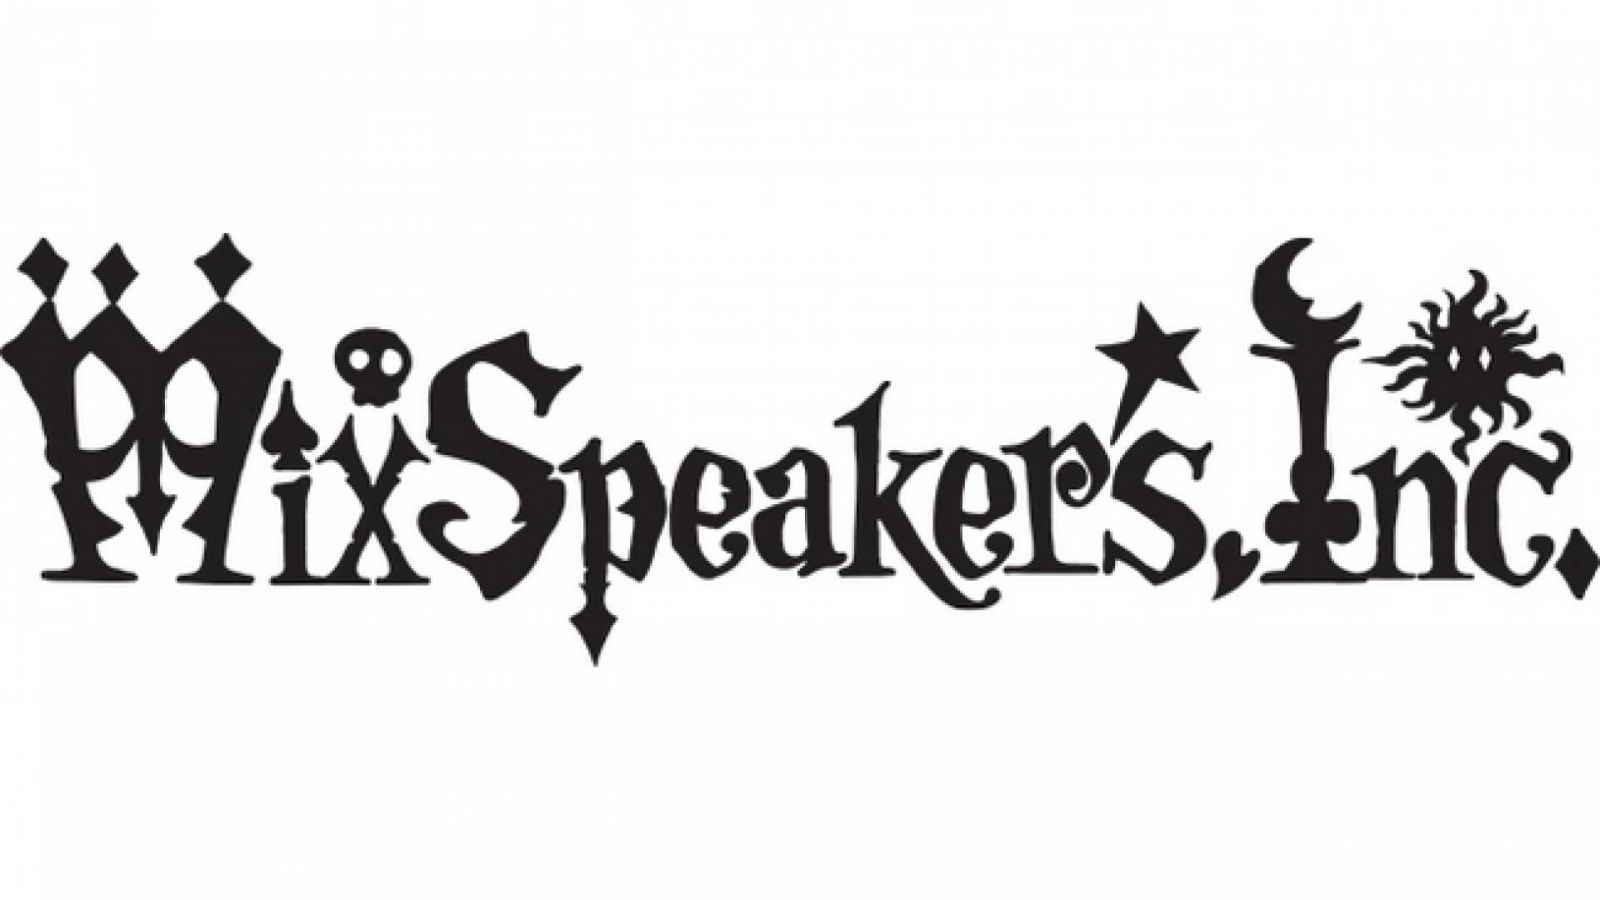 Mix Speaker's,Inc. to Reveal New Member © Mix Speaker's, Inc.